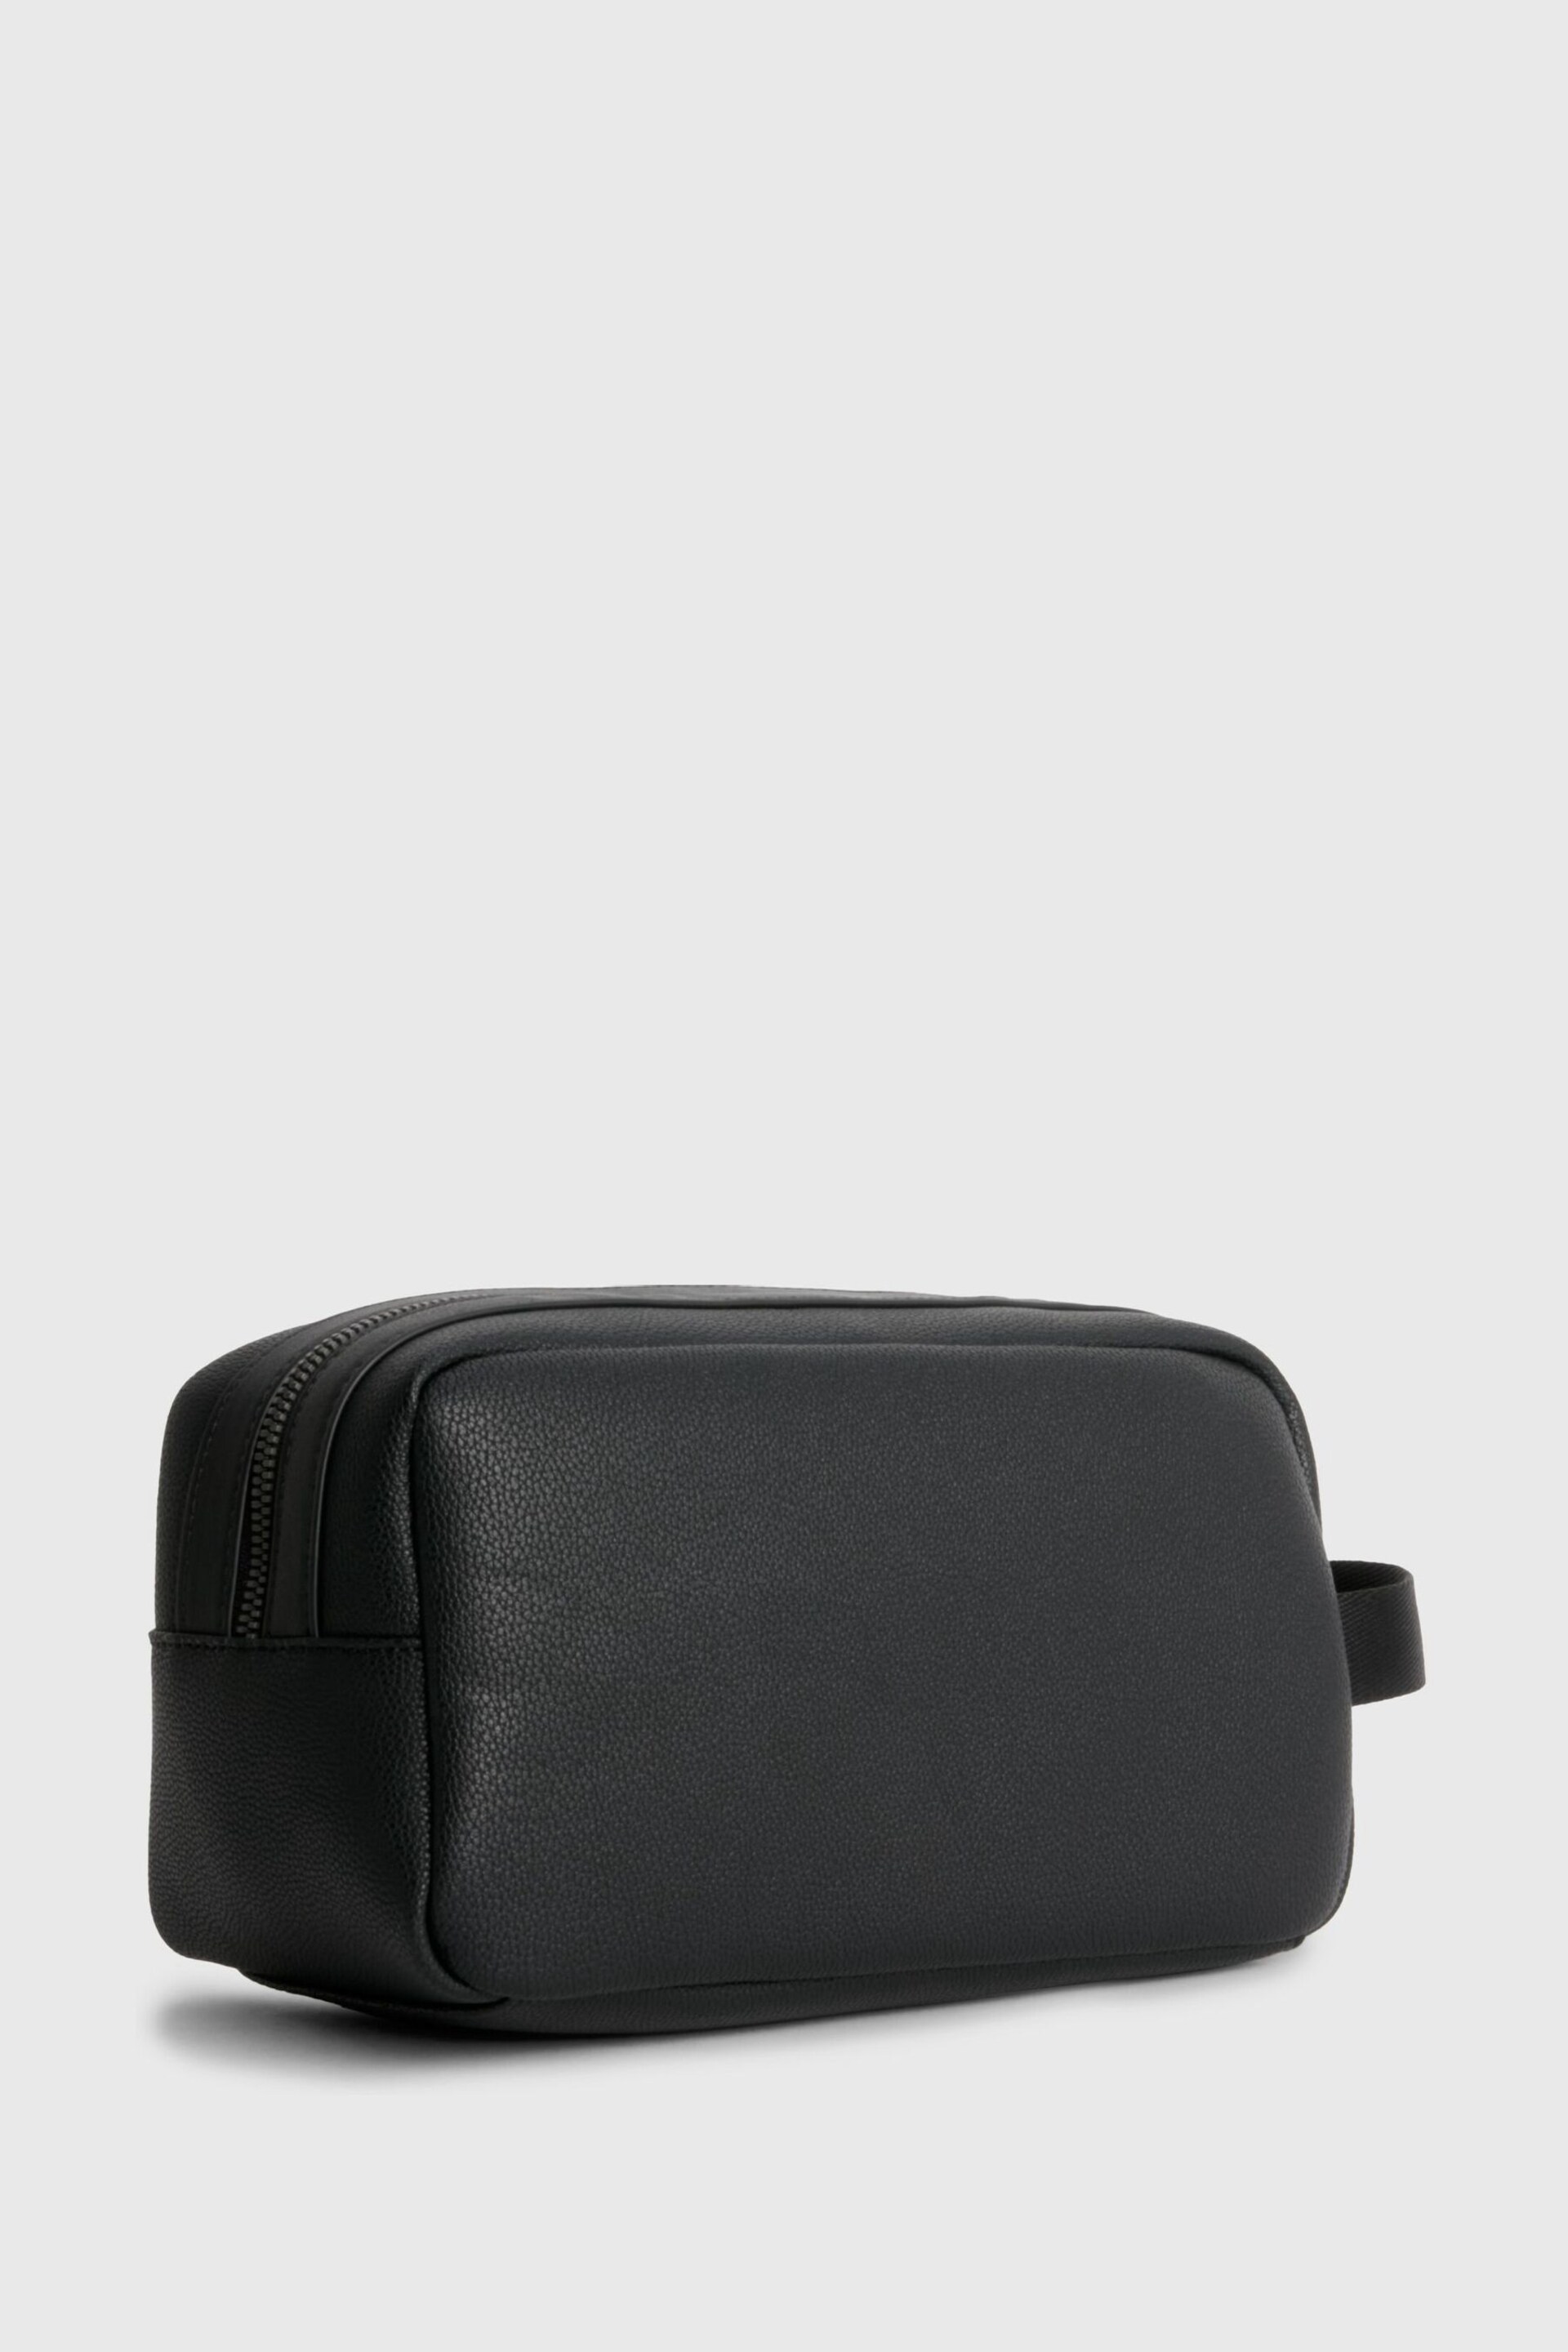 Calvin Klein Black Warmth Washbag - Image 3 of 4